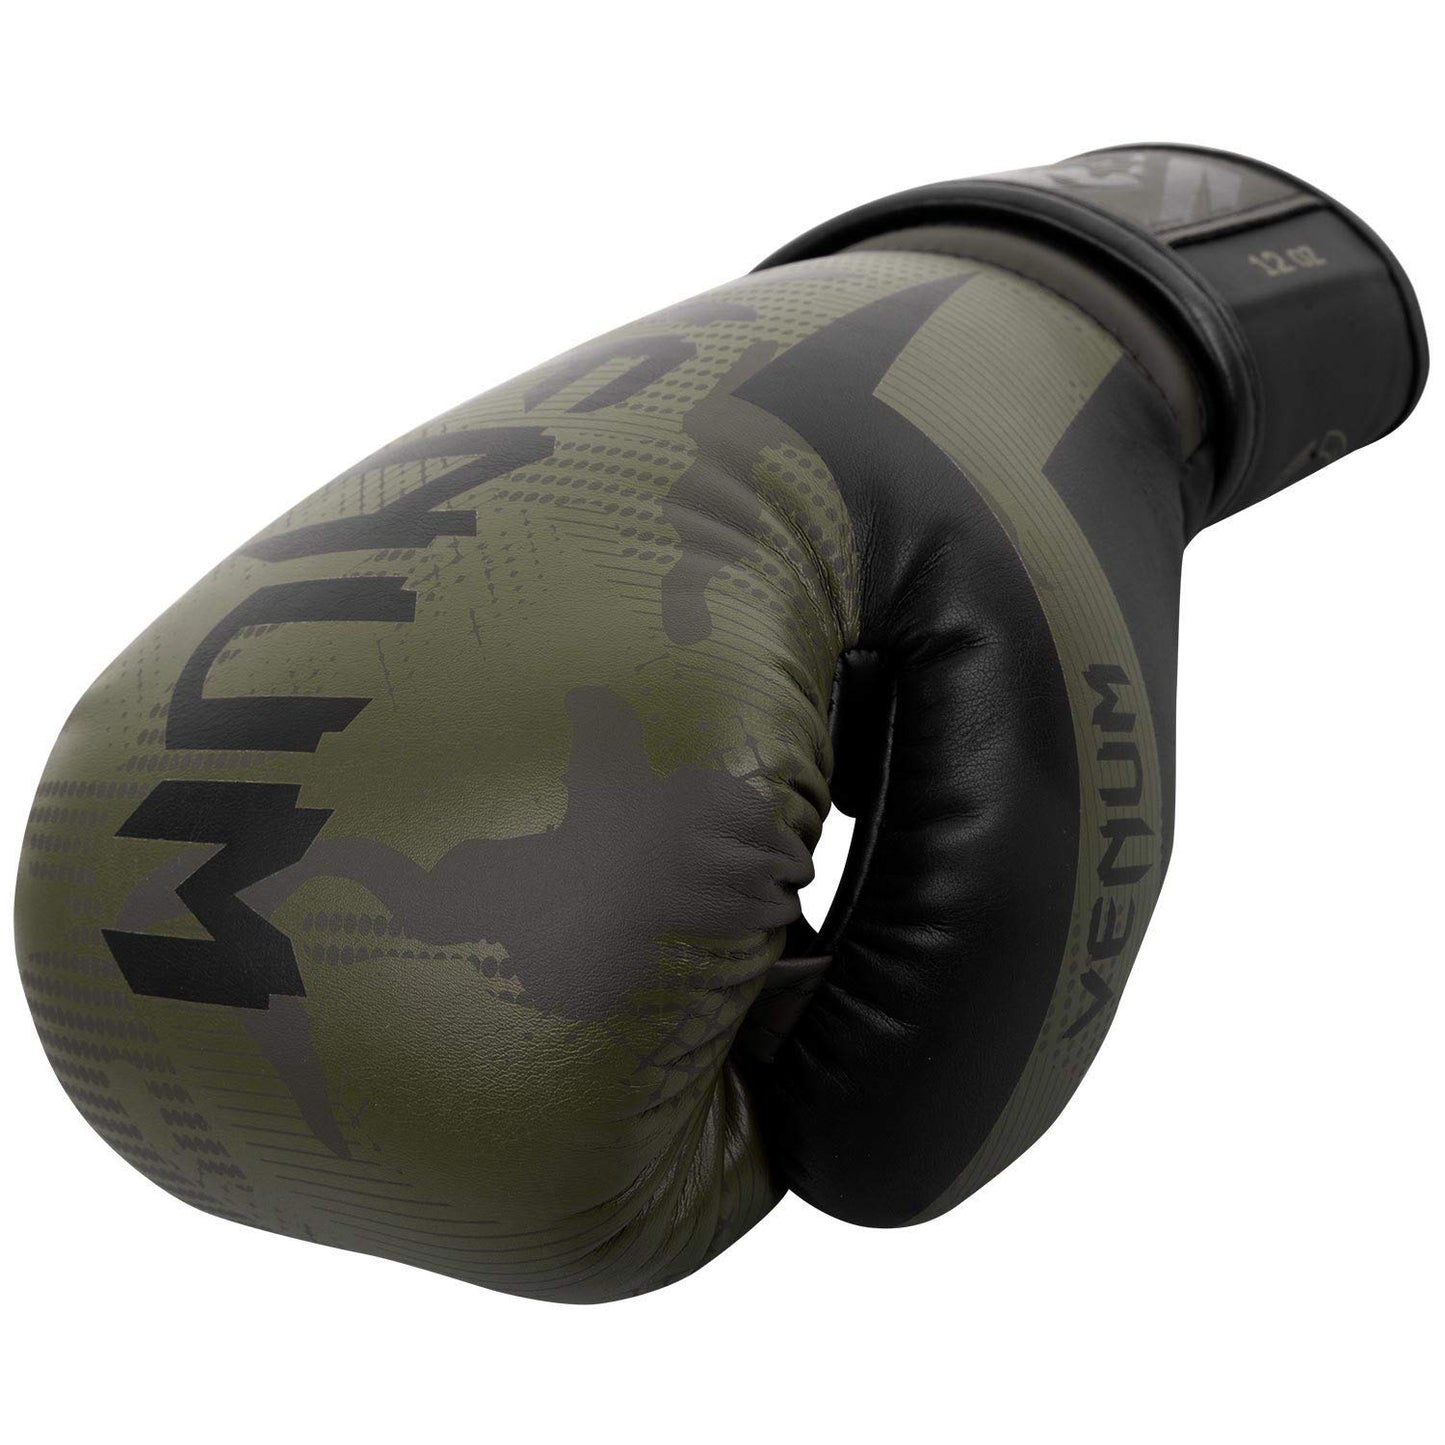 Venum Elite Boxing Gloves - Best Price online Prokicksports.com